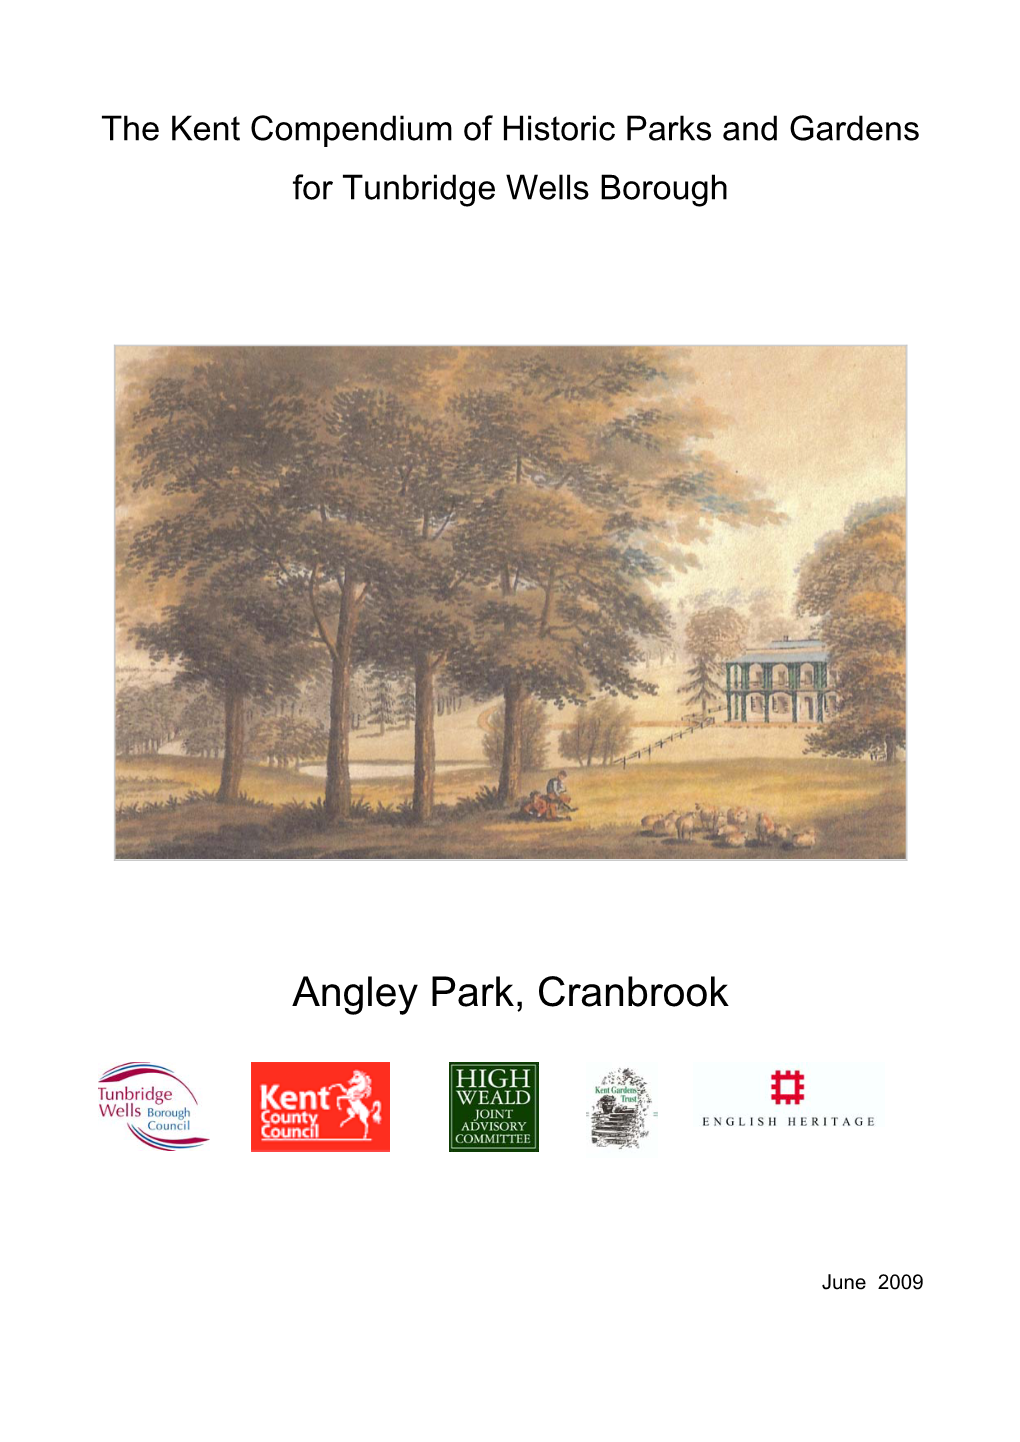 Angley Park, Cranbrook